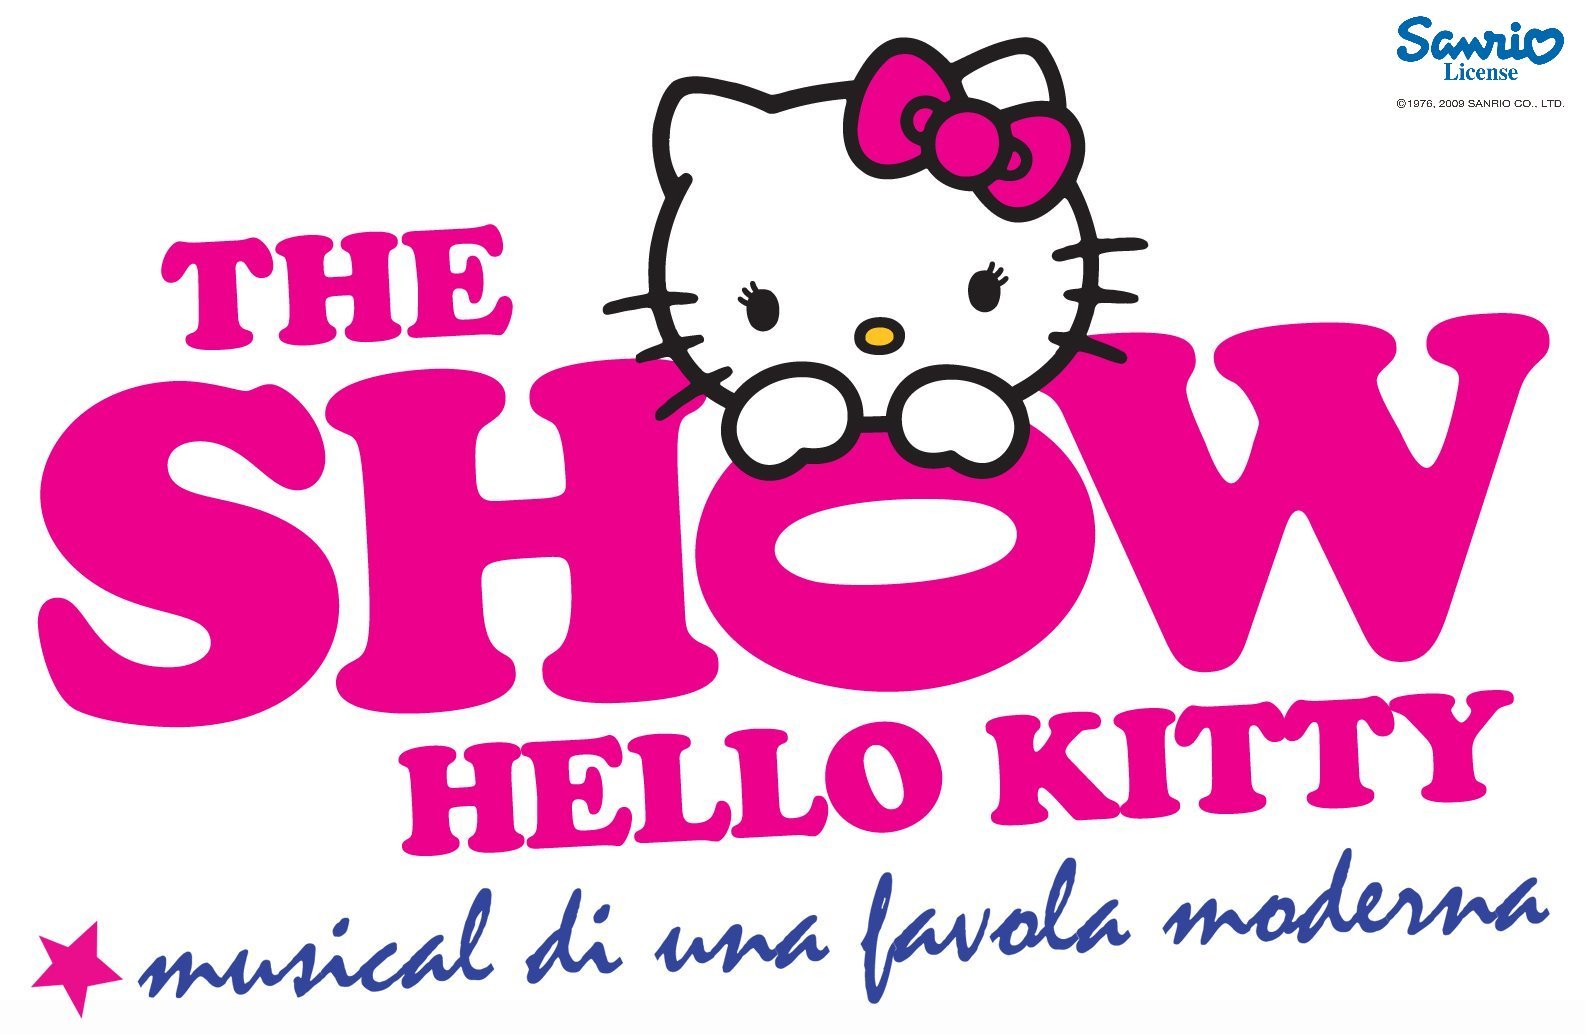 Hello Kitty Logo | Wallpapers Area